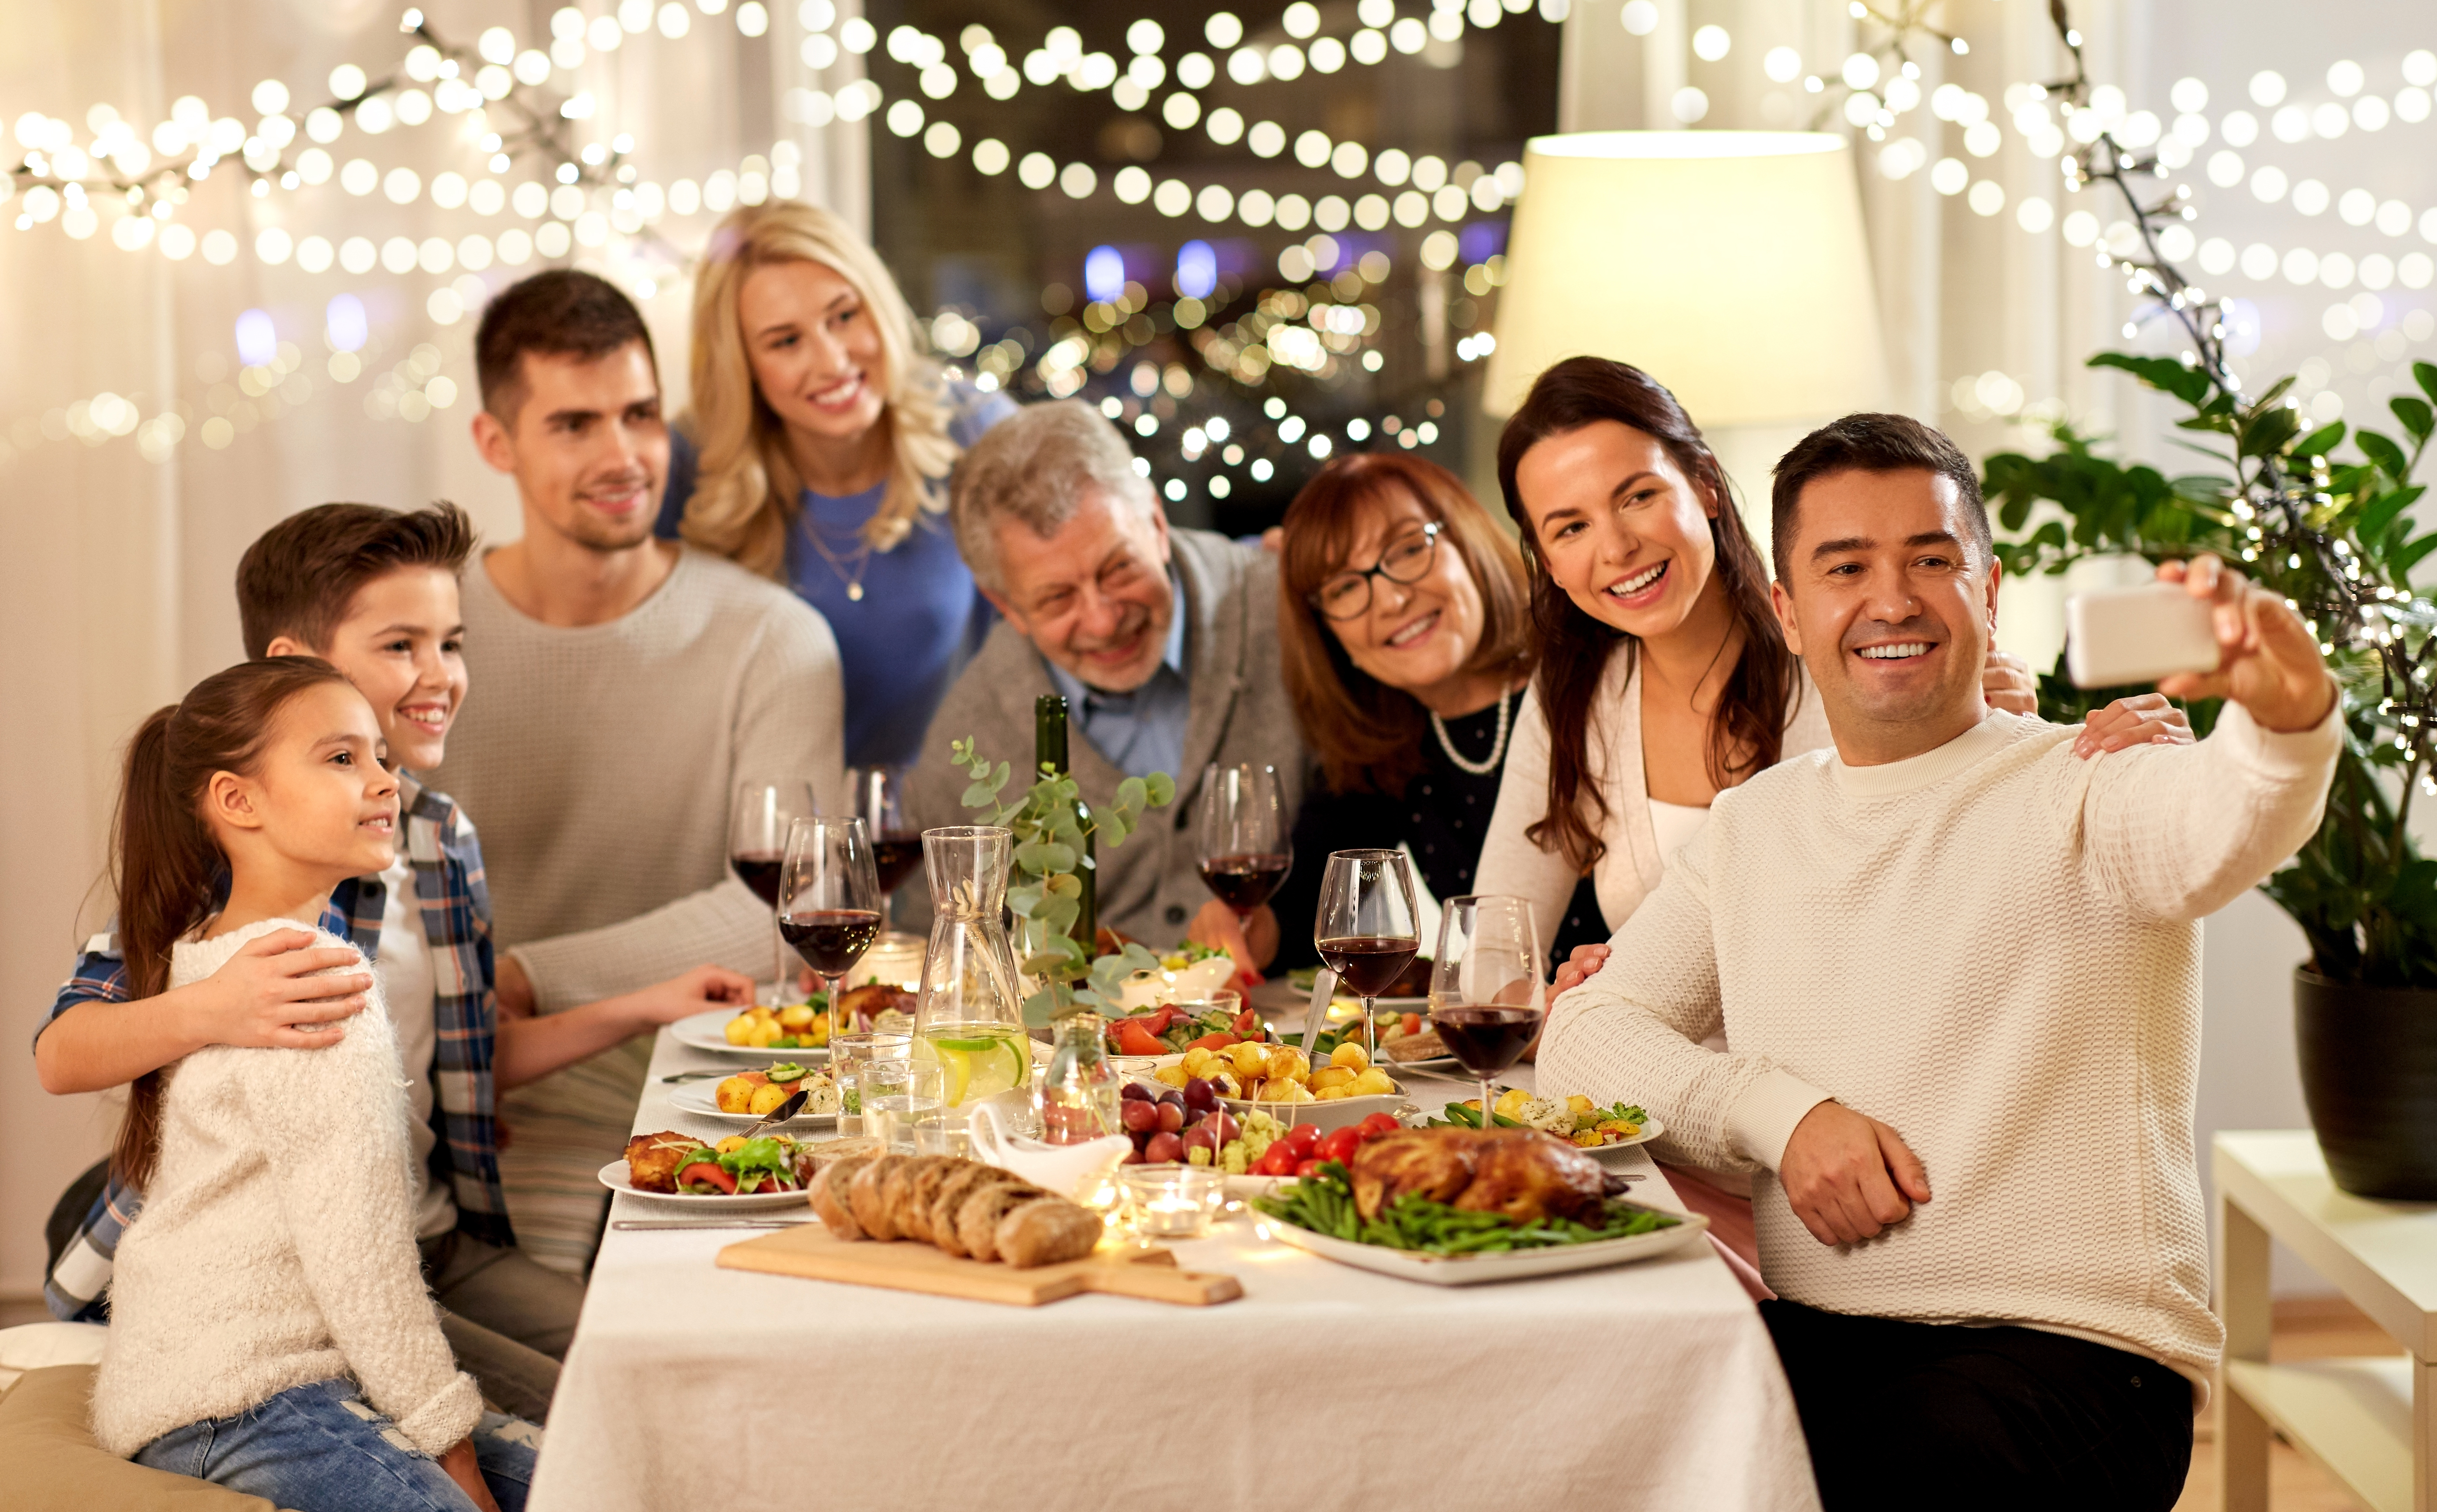 A man clicking a selfie at a family dinner | Source: Shutterstock